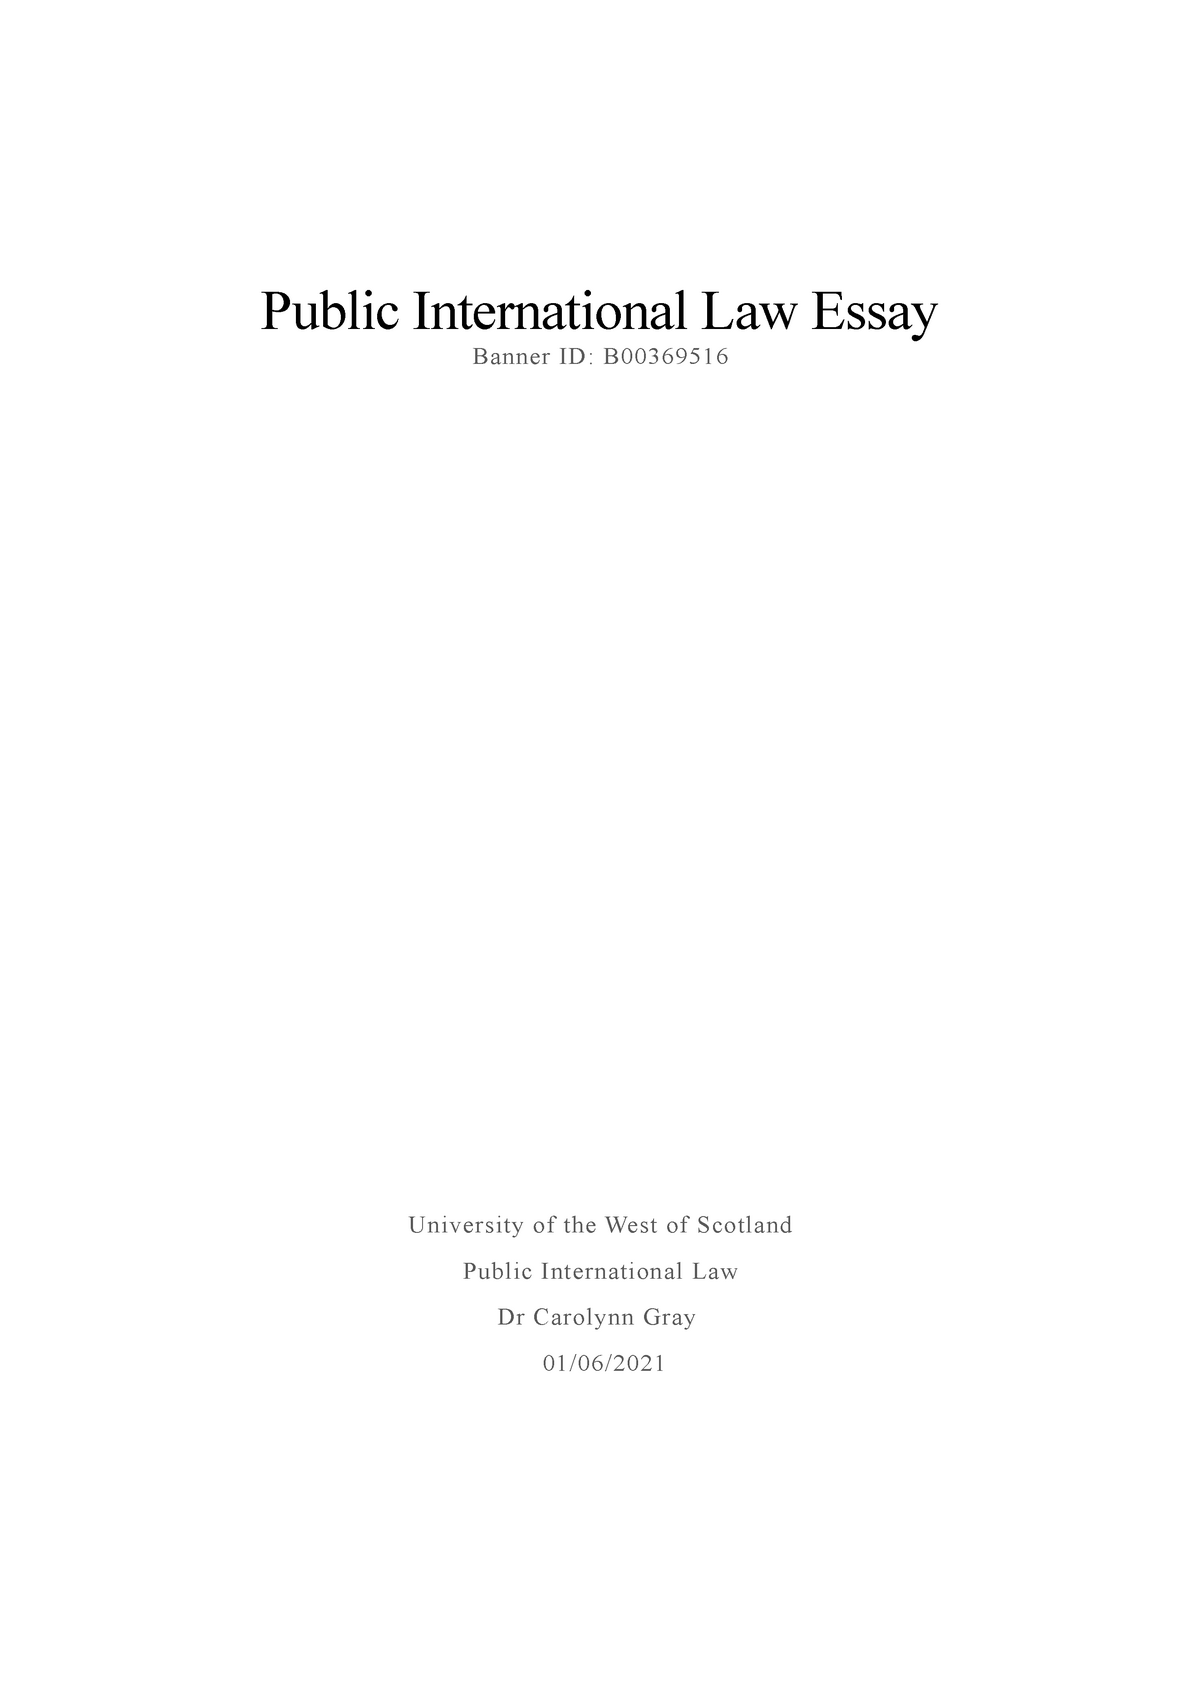 international law essay topics